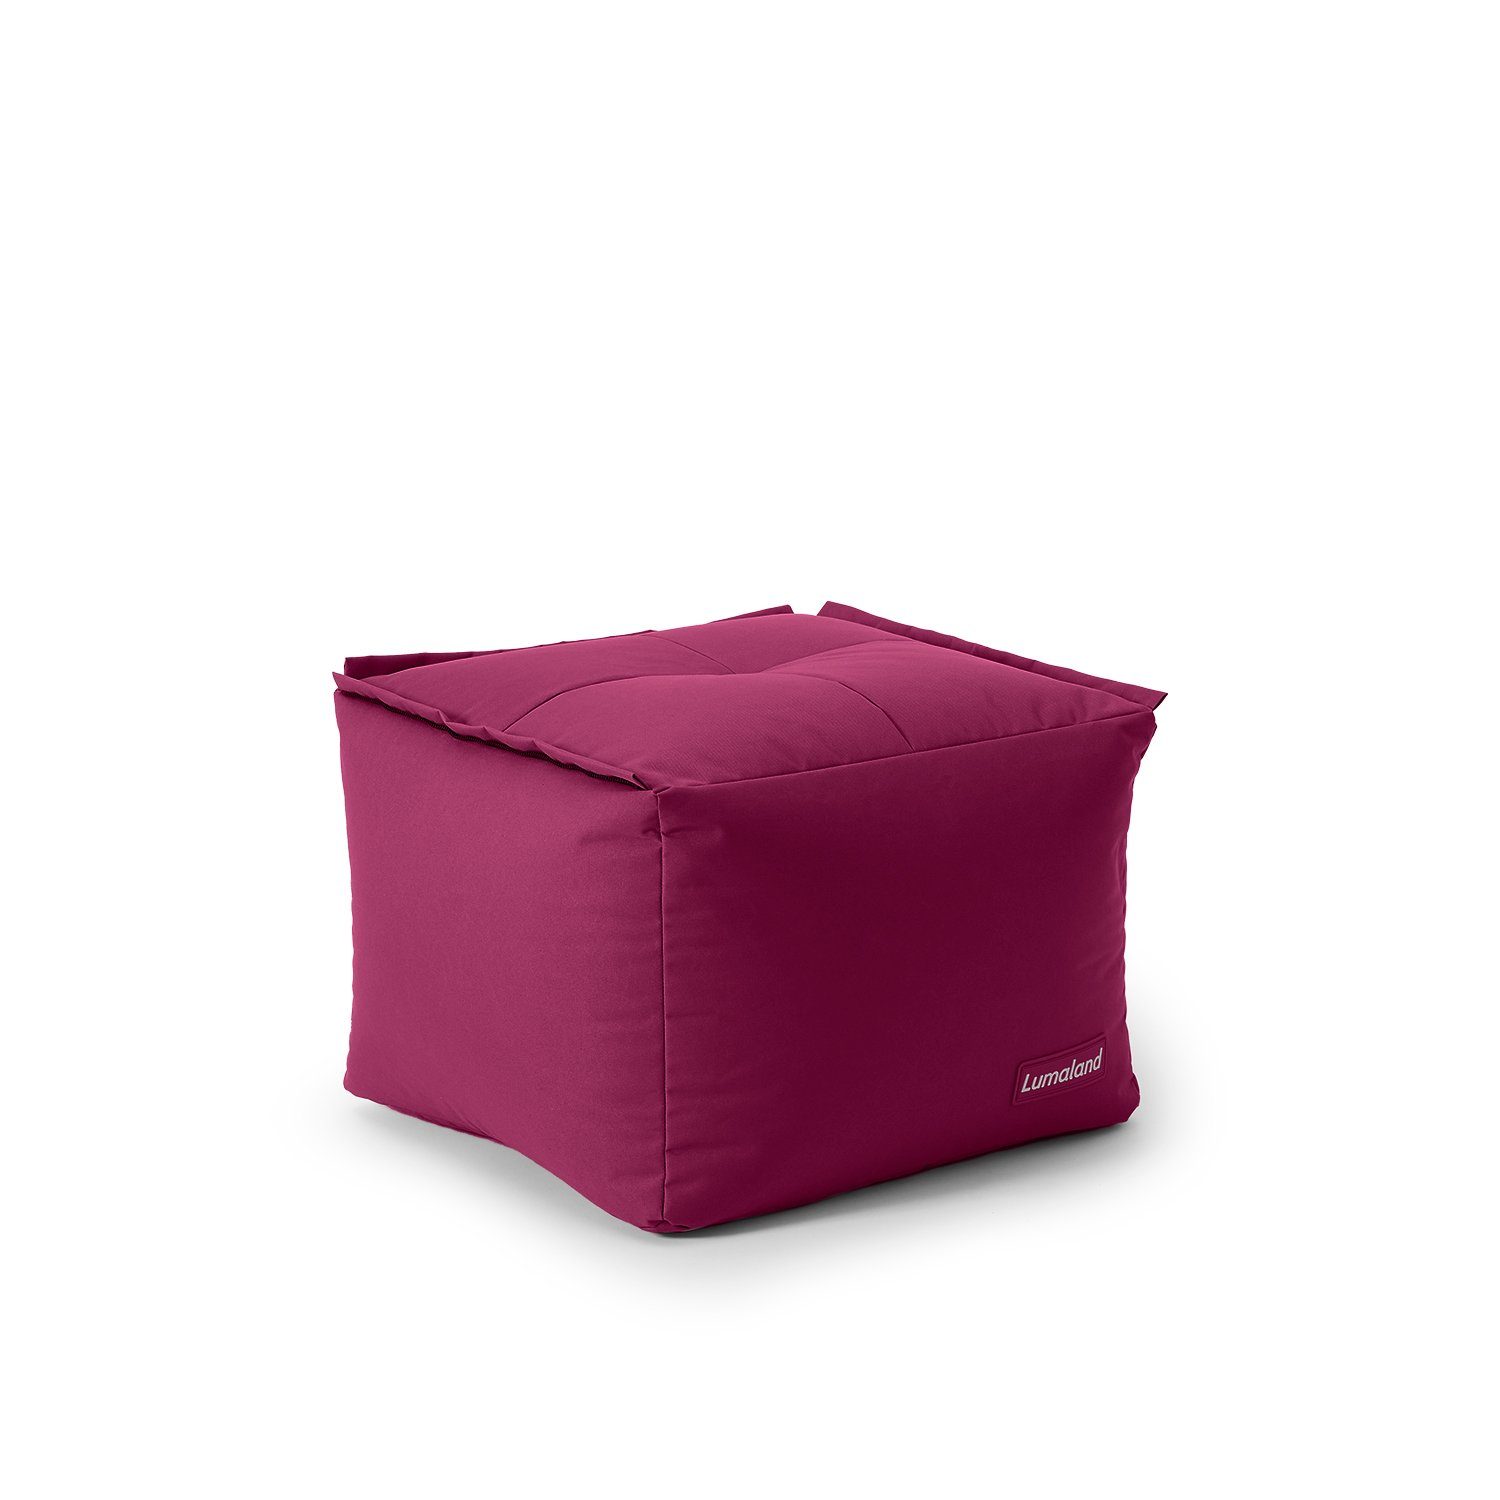 erweiterbar System, Loungeset mit dem kombinierbar abnehmbarer Sessel Lumaland & In- Bezug wasserfest Sofa individuell rotwein Modularen waschbar outdoor